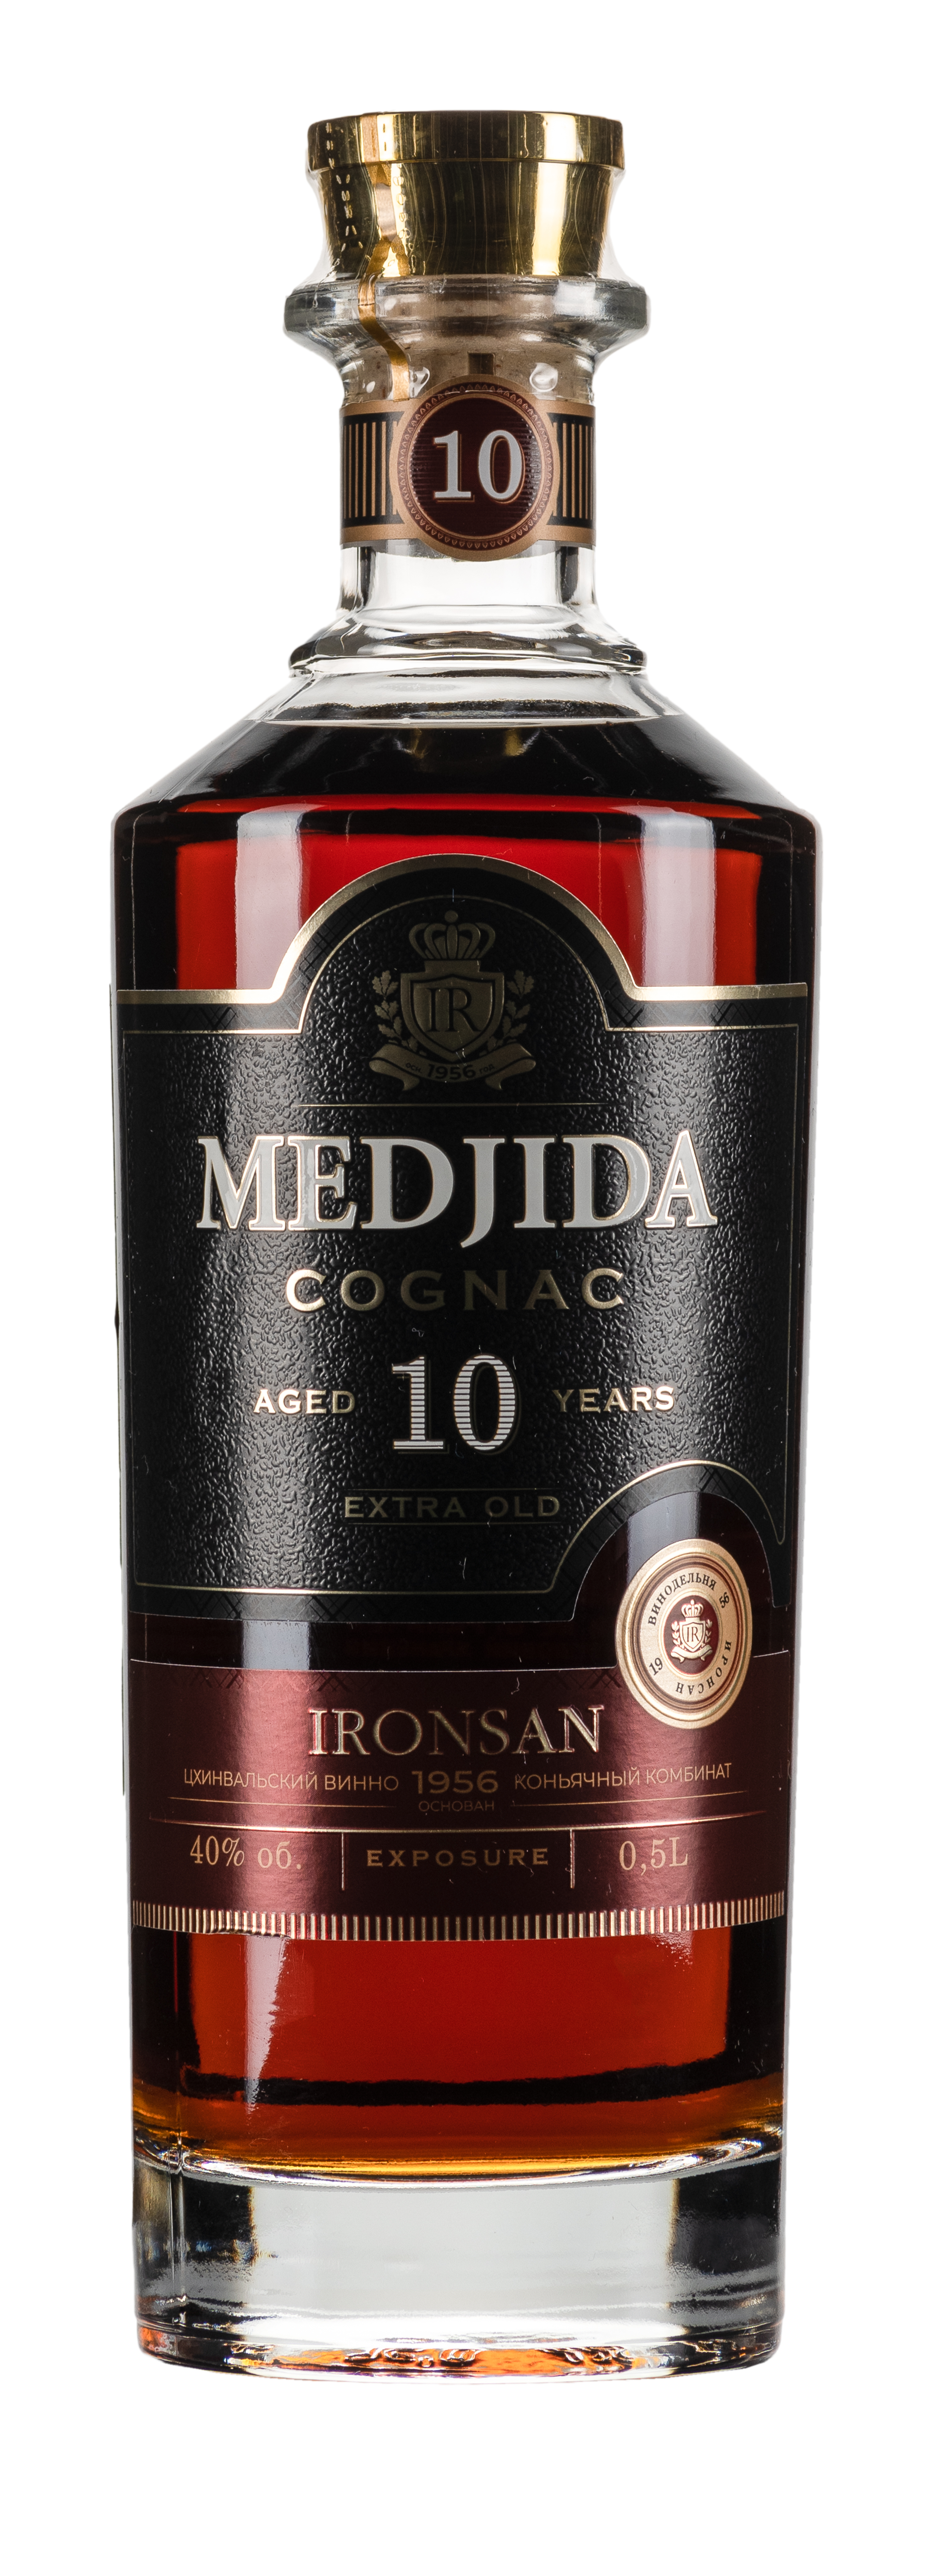 Cognac Medjida 10 Years